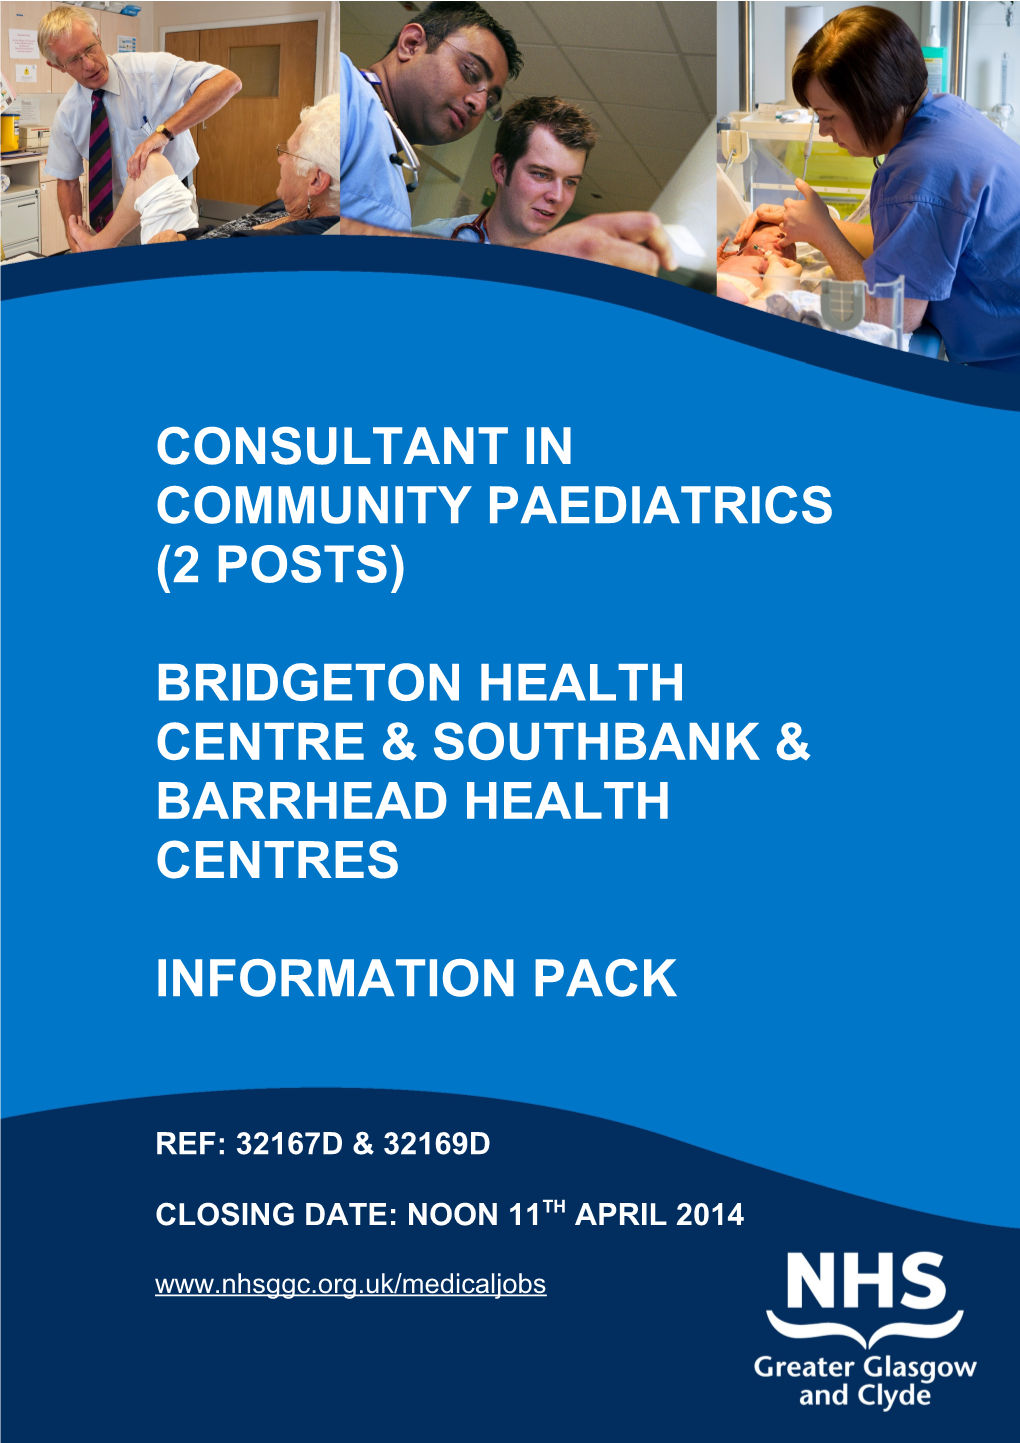 Bridgeton Health Centre & Southbank & BARRHEAD HEALTH CENTRES